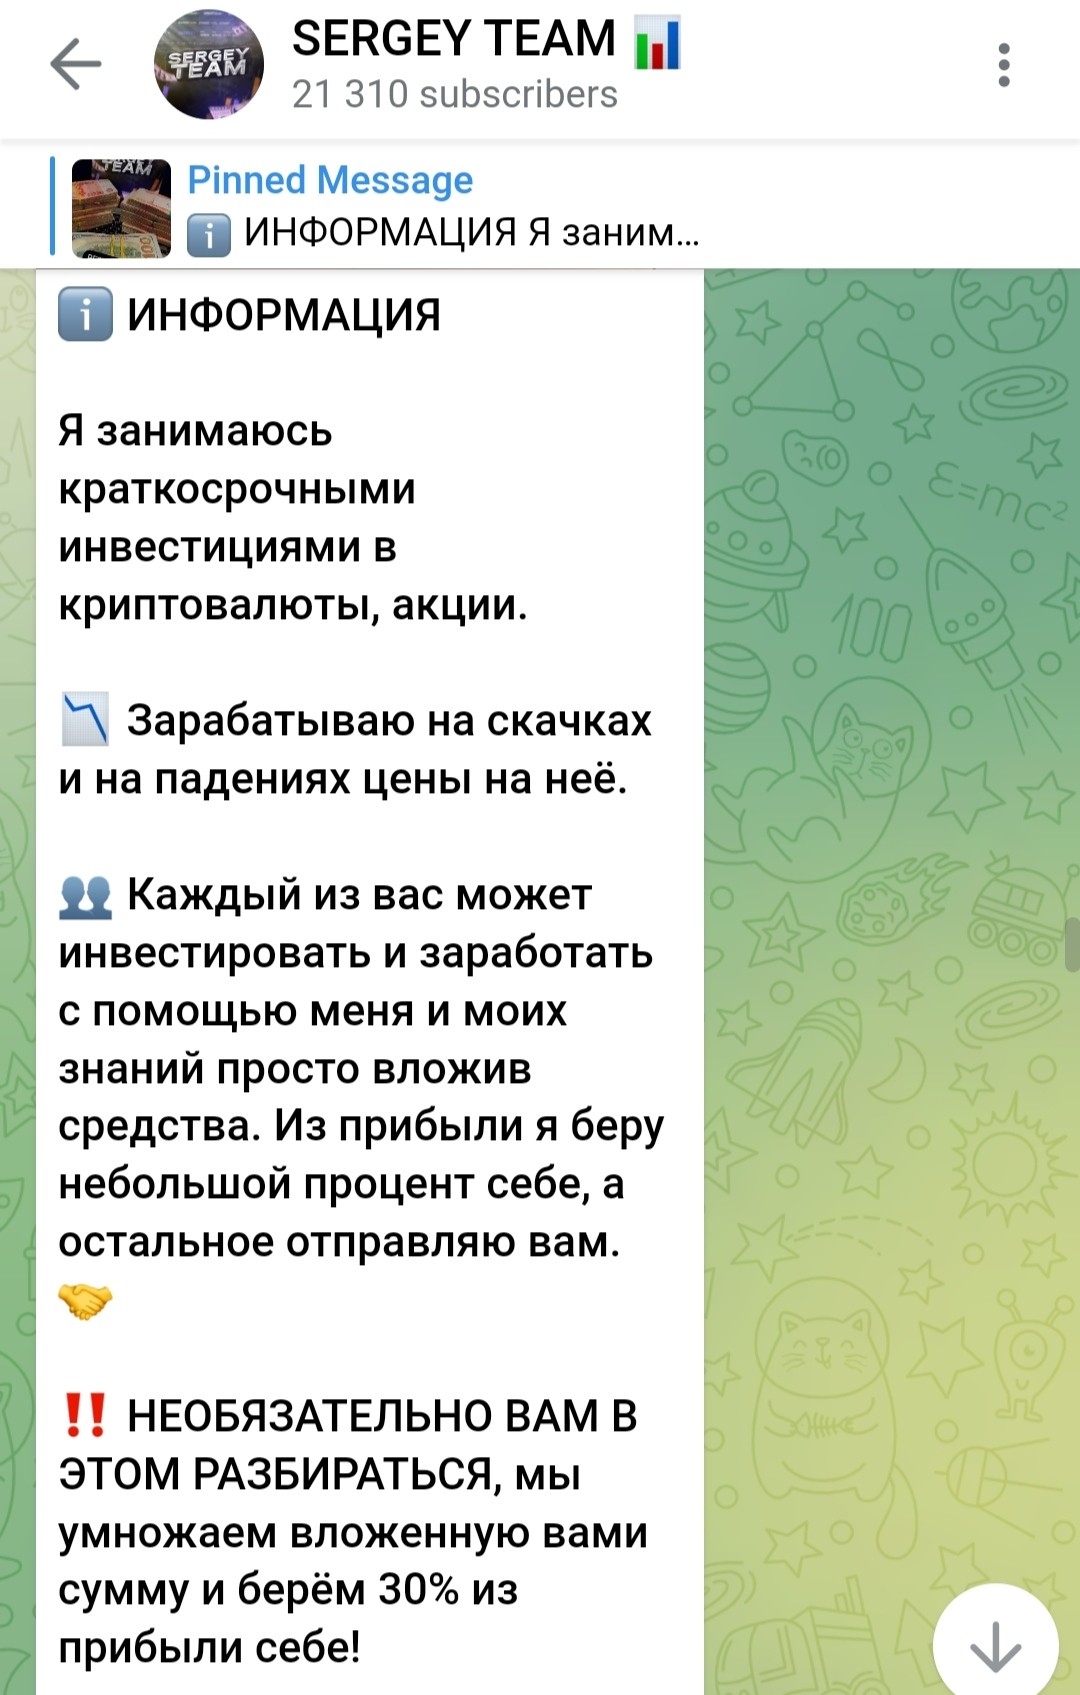 Sergey Team телеграм